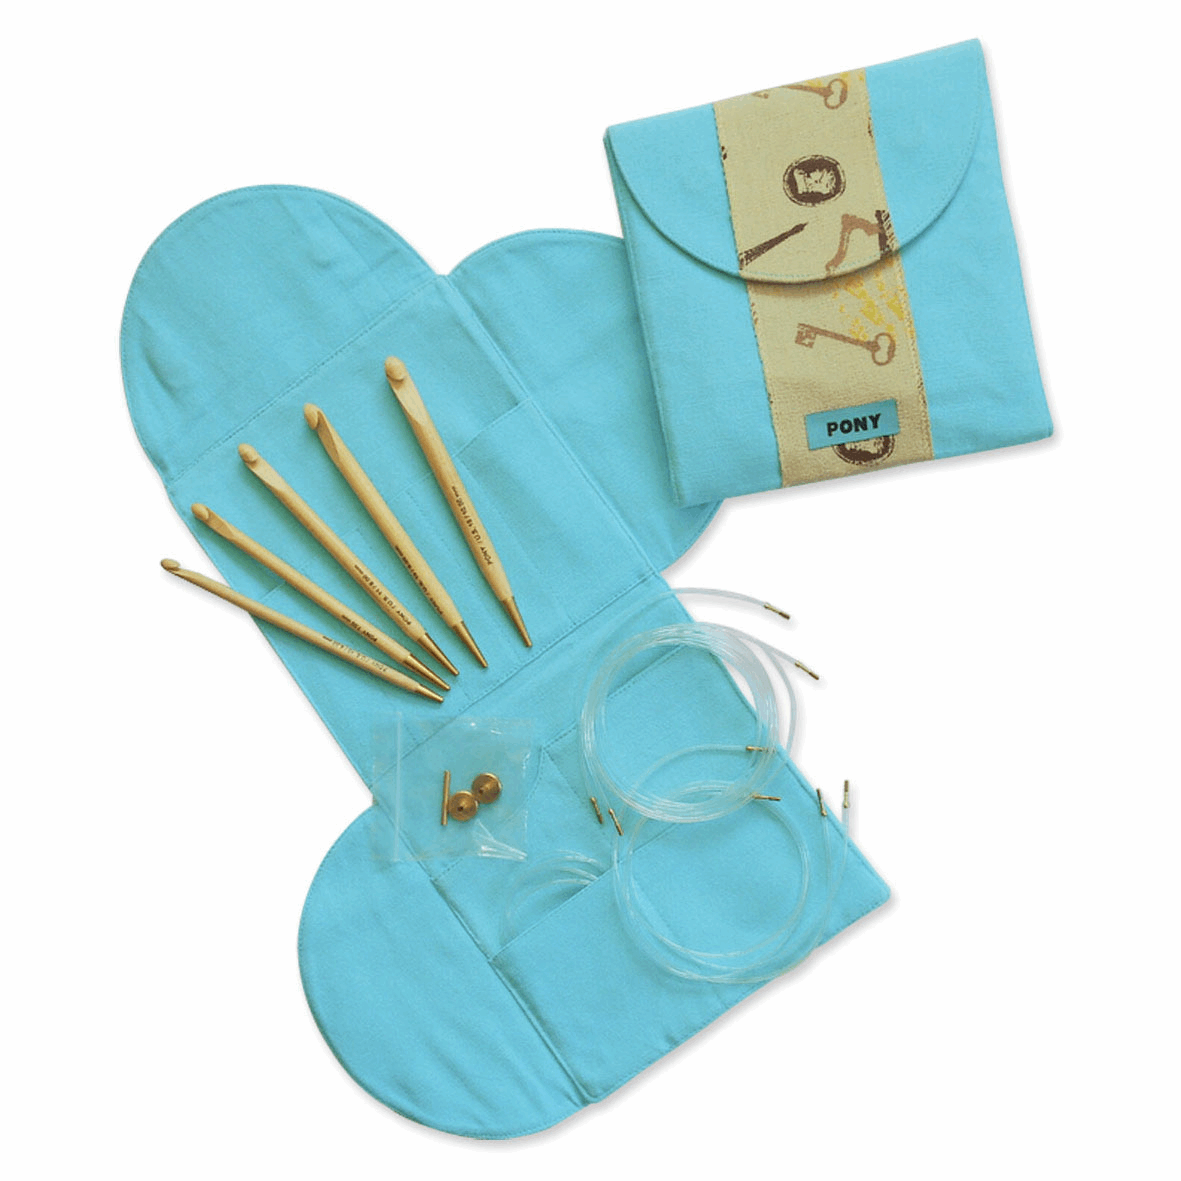 PONY Crochet Hook Set - Absolute, Blue Ribbon Maple 15cm